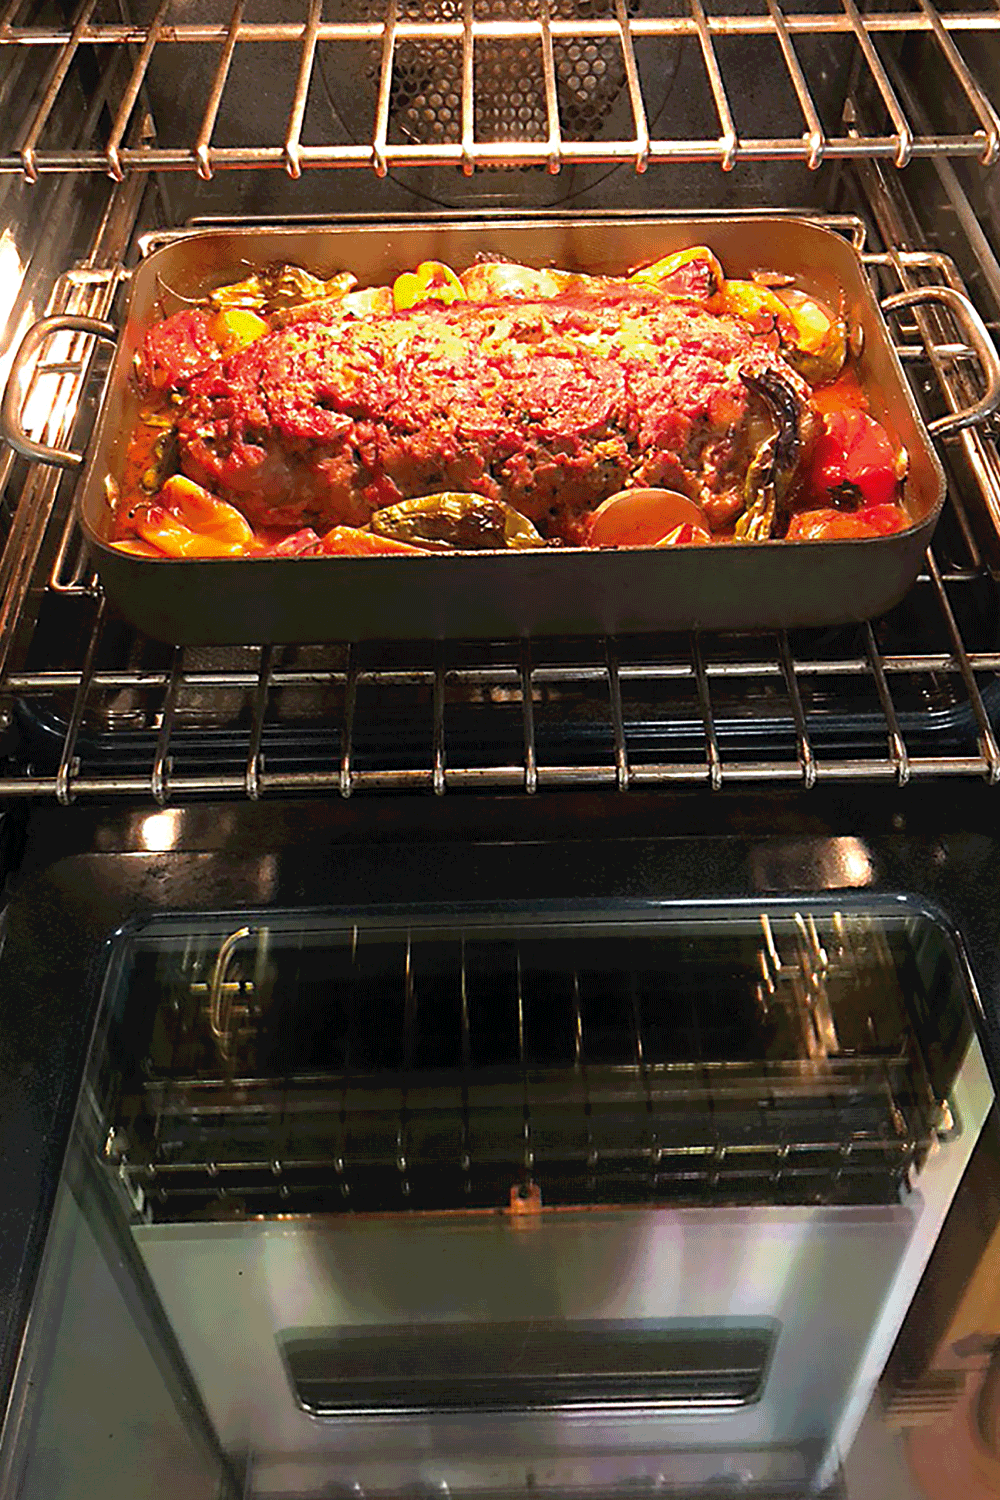 Oven Baked Meatloaf with vegetables.